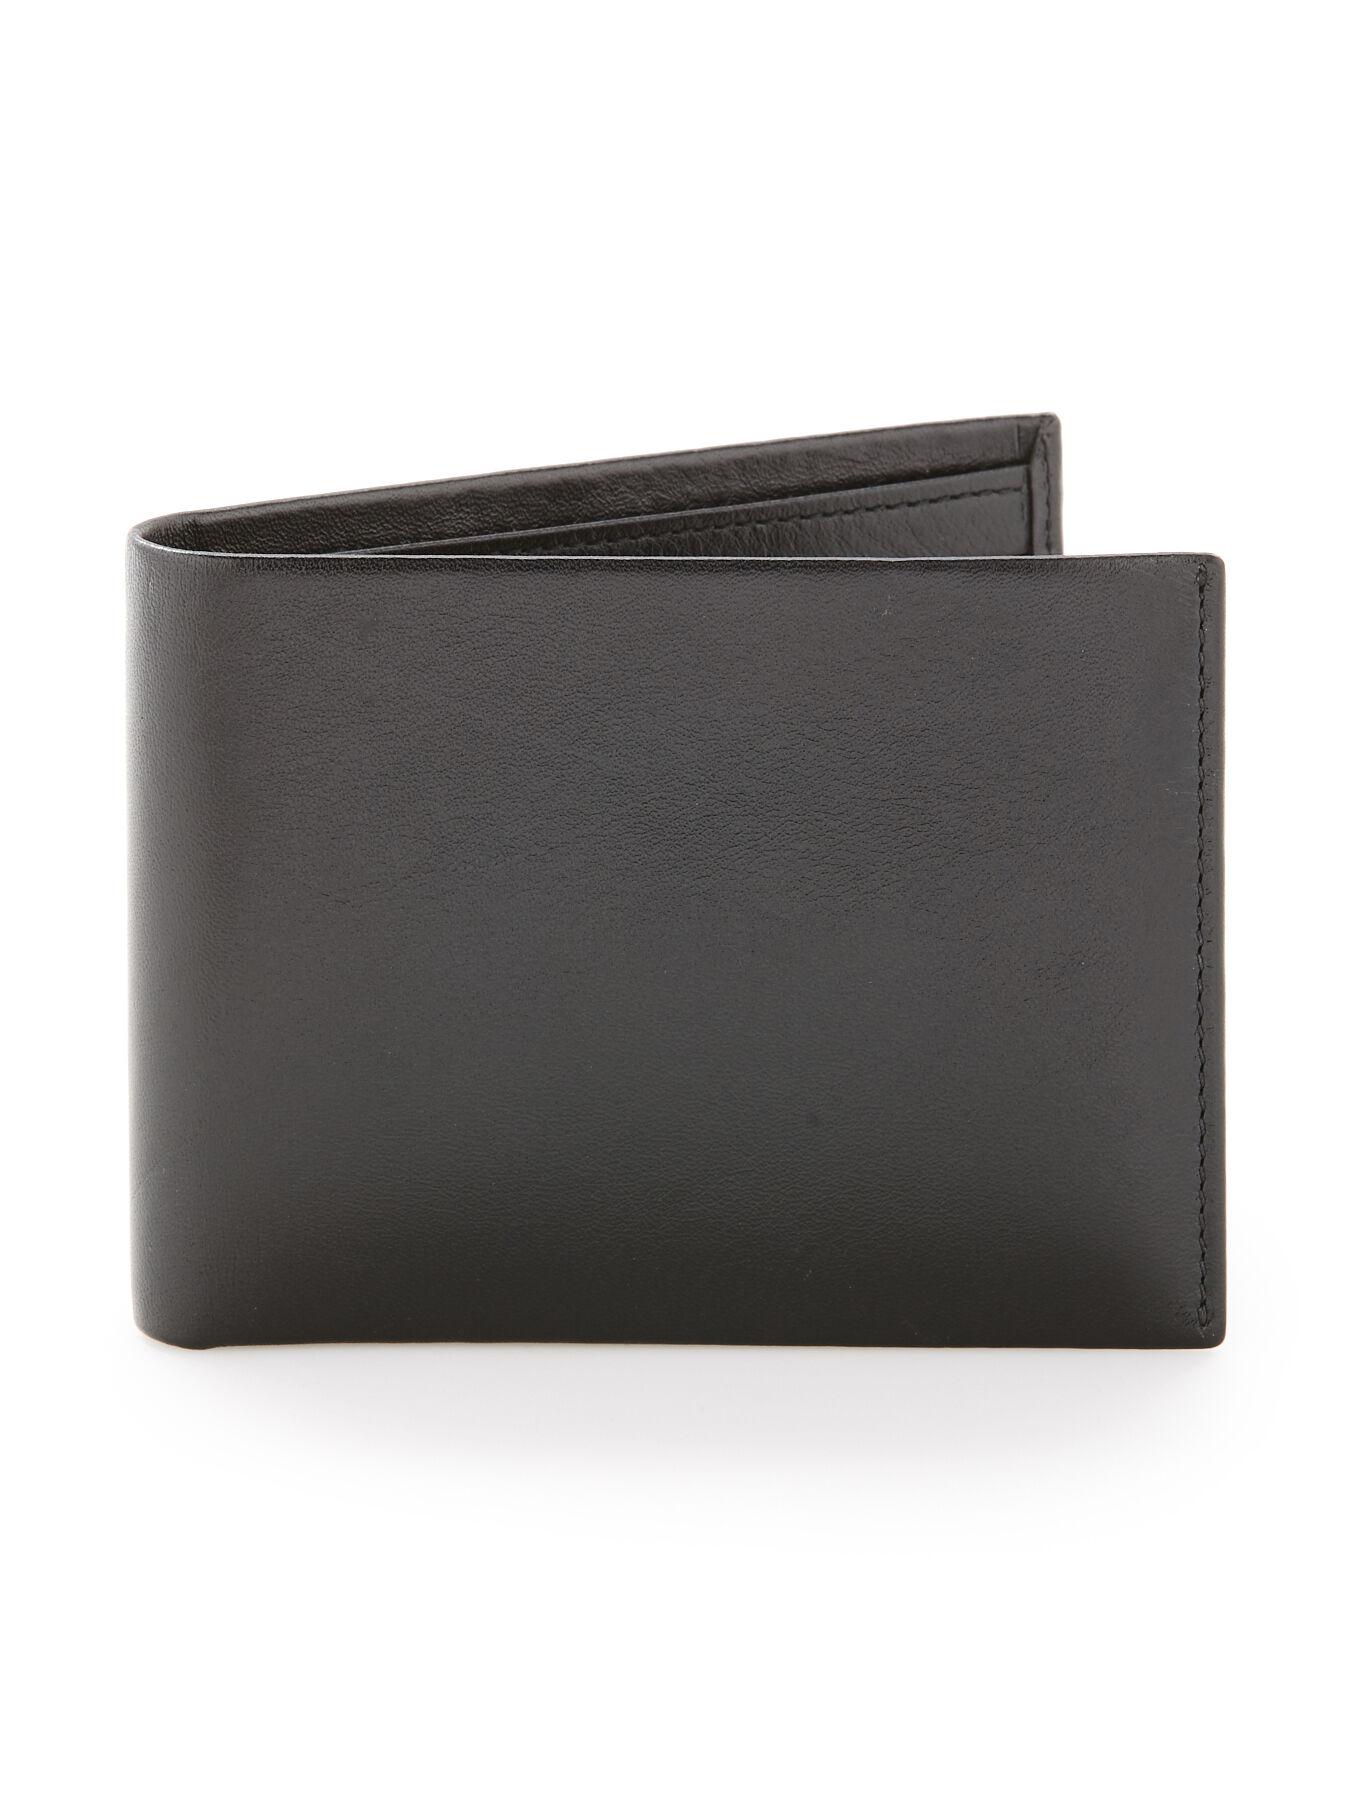 Perry Ellis Genuine Glazed Leather Wallet in Black for Men - Lyst